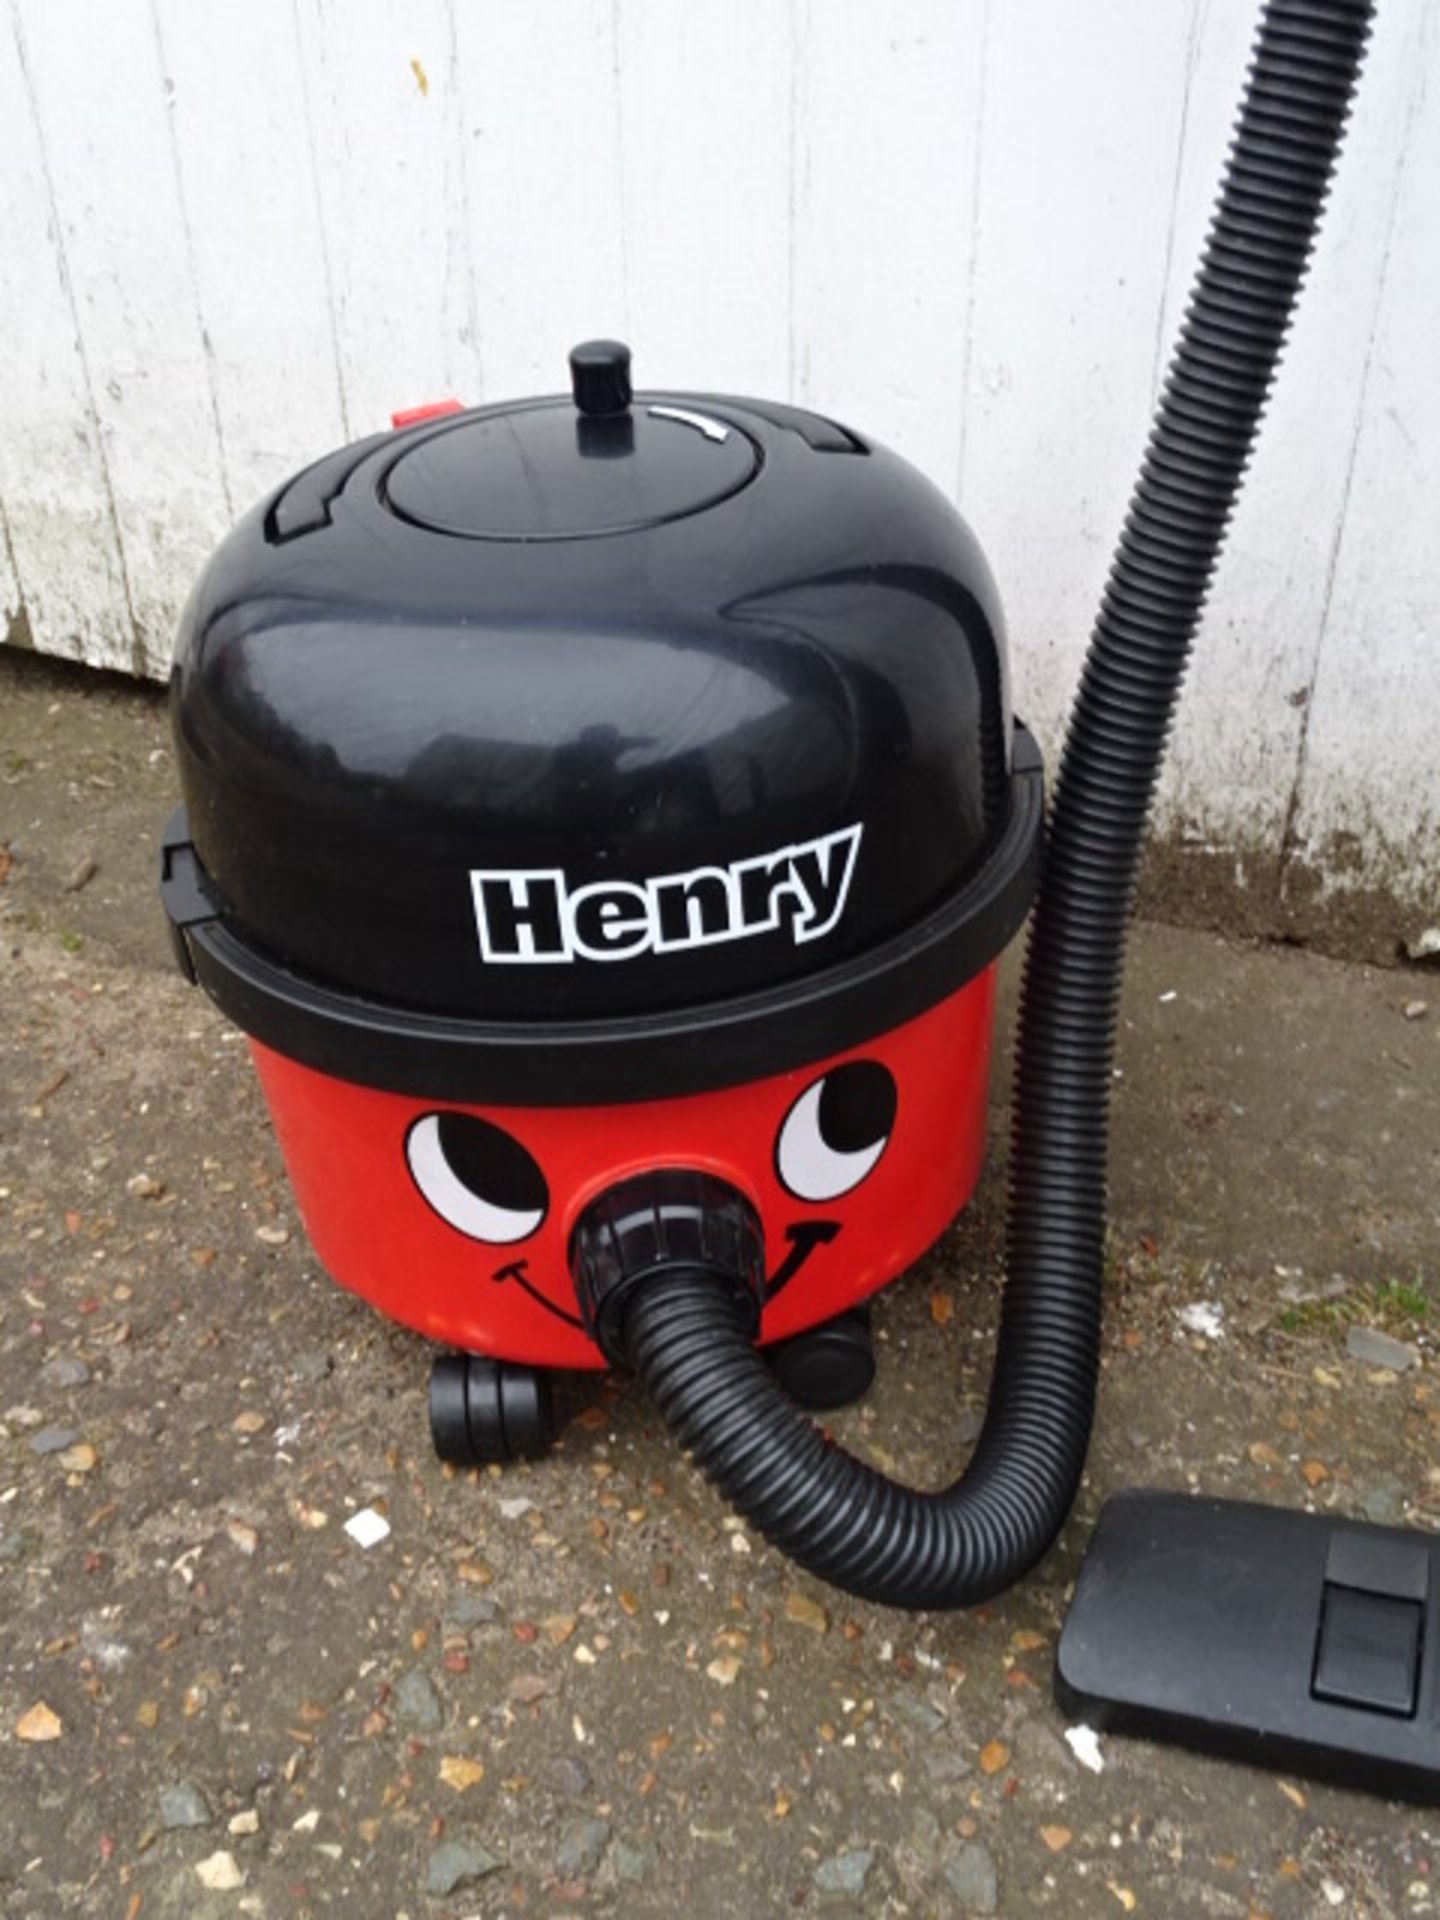 Henry vacuum cleaner in good working order - Image 2 of 2